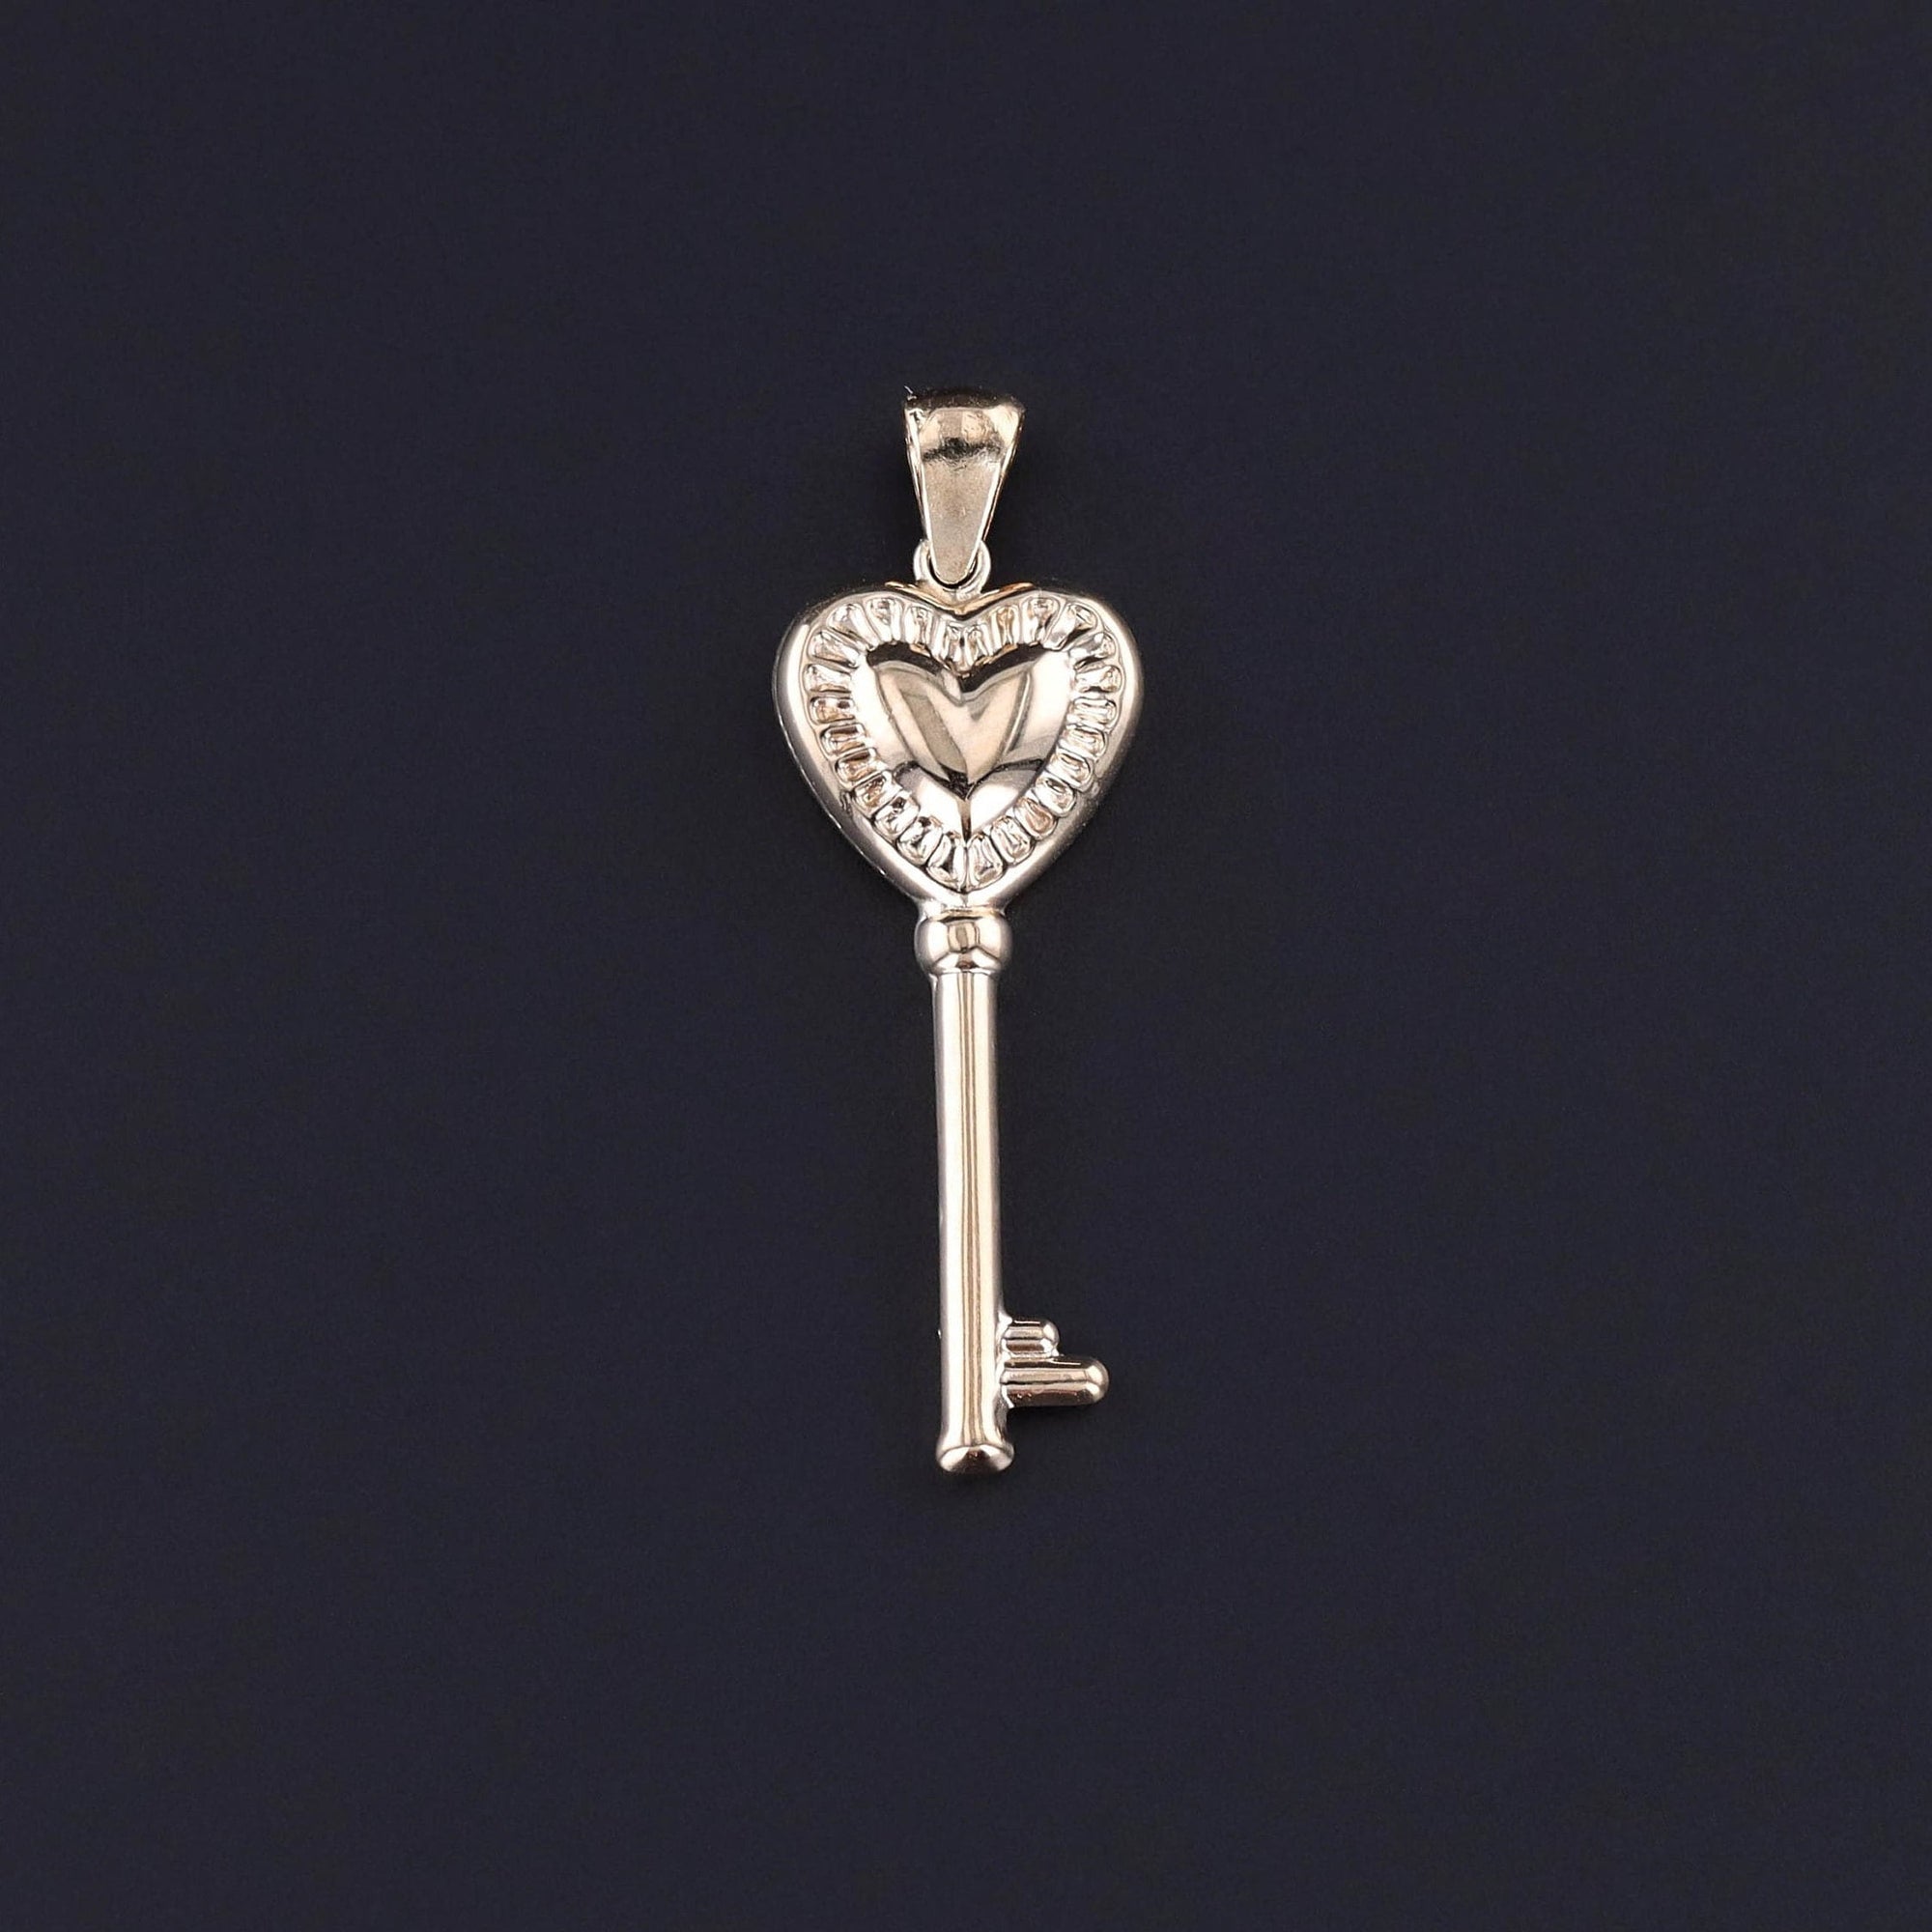 Vintage Heart Shaped Key Pendant of 14k Gold